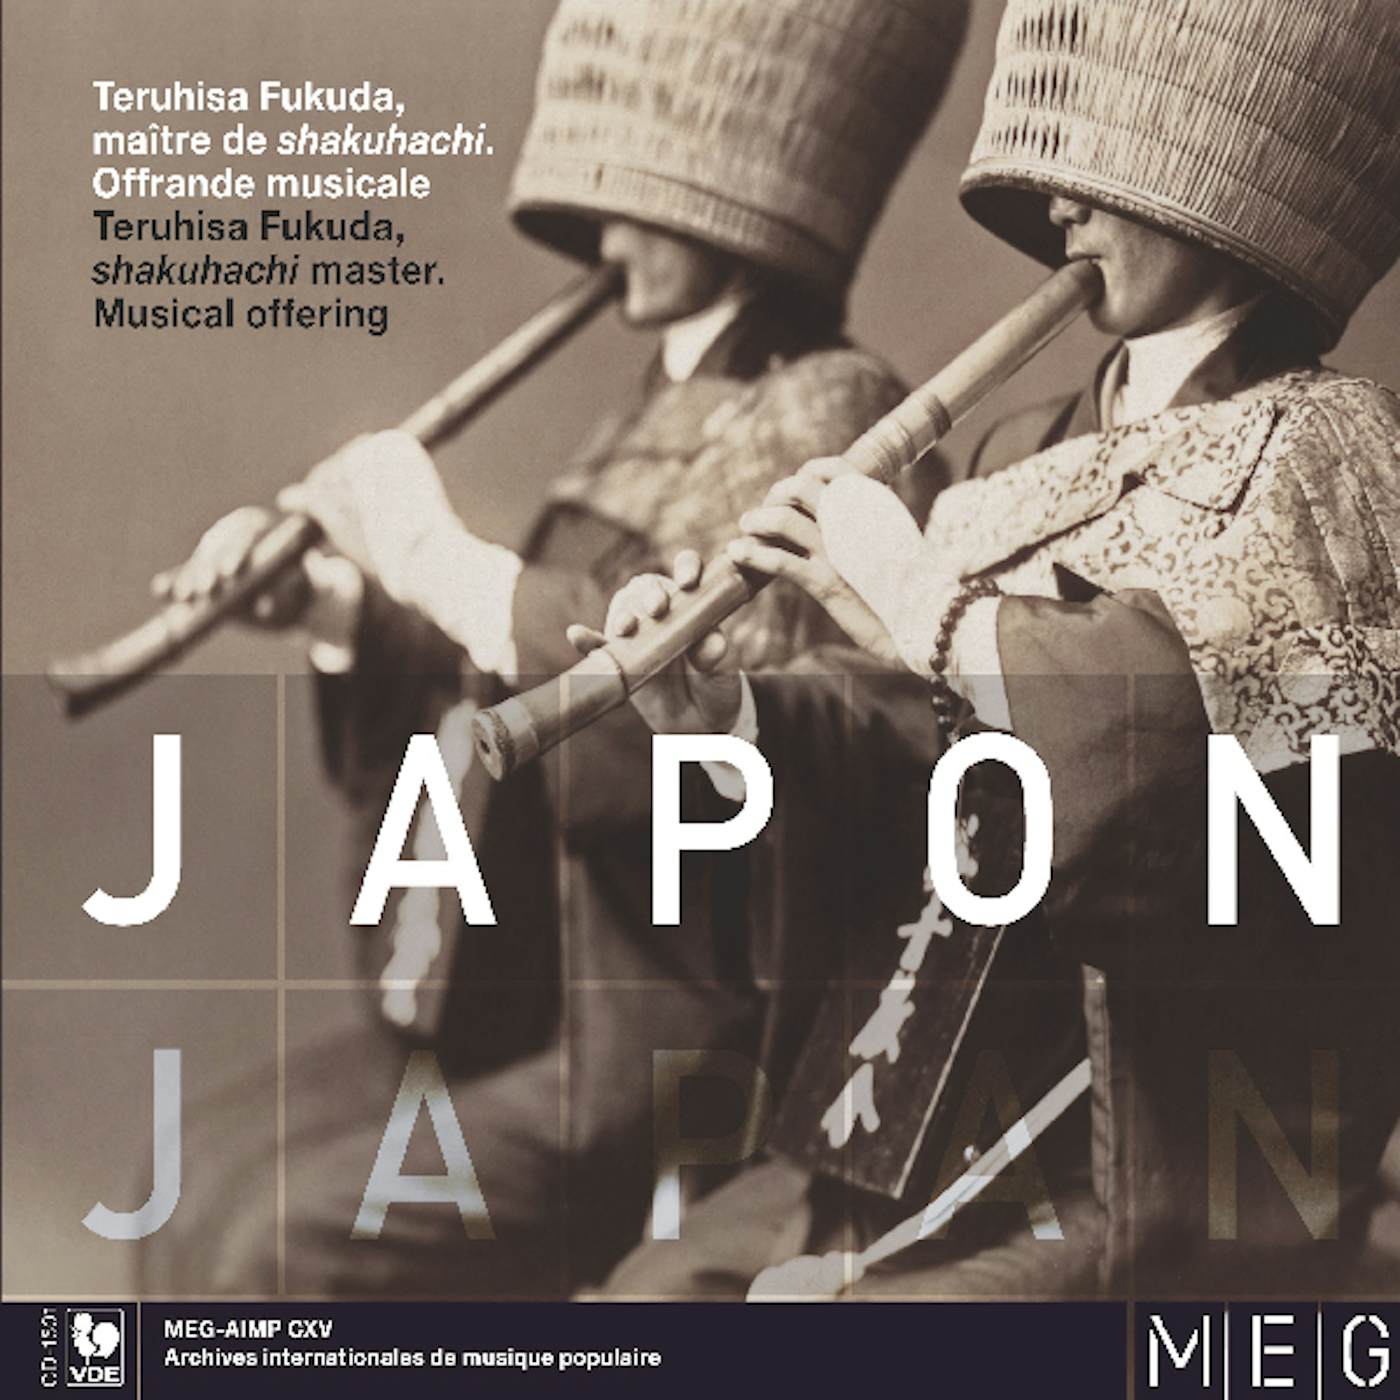 Teruhisa Fukuda JAPON (JAPAN) Vinyl Record